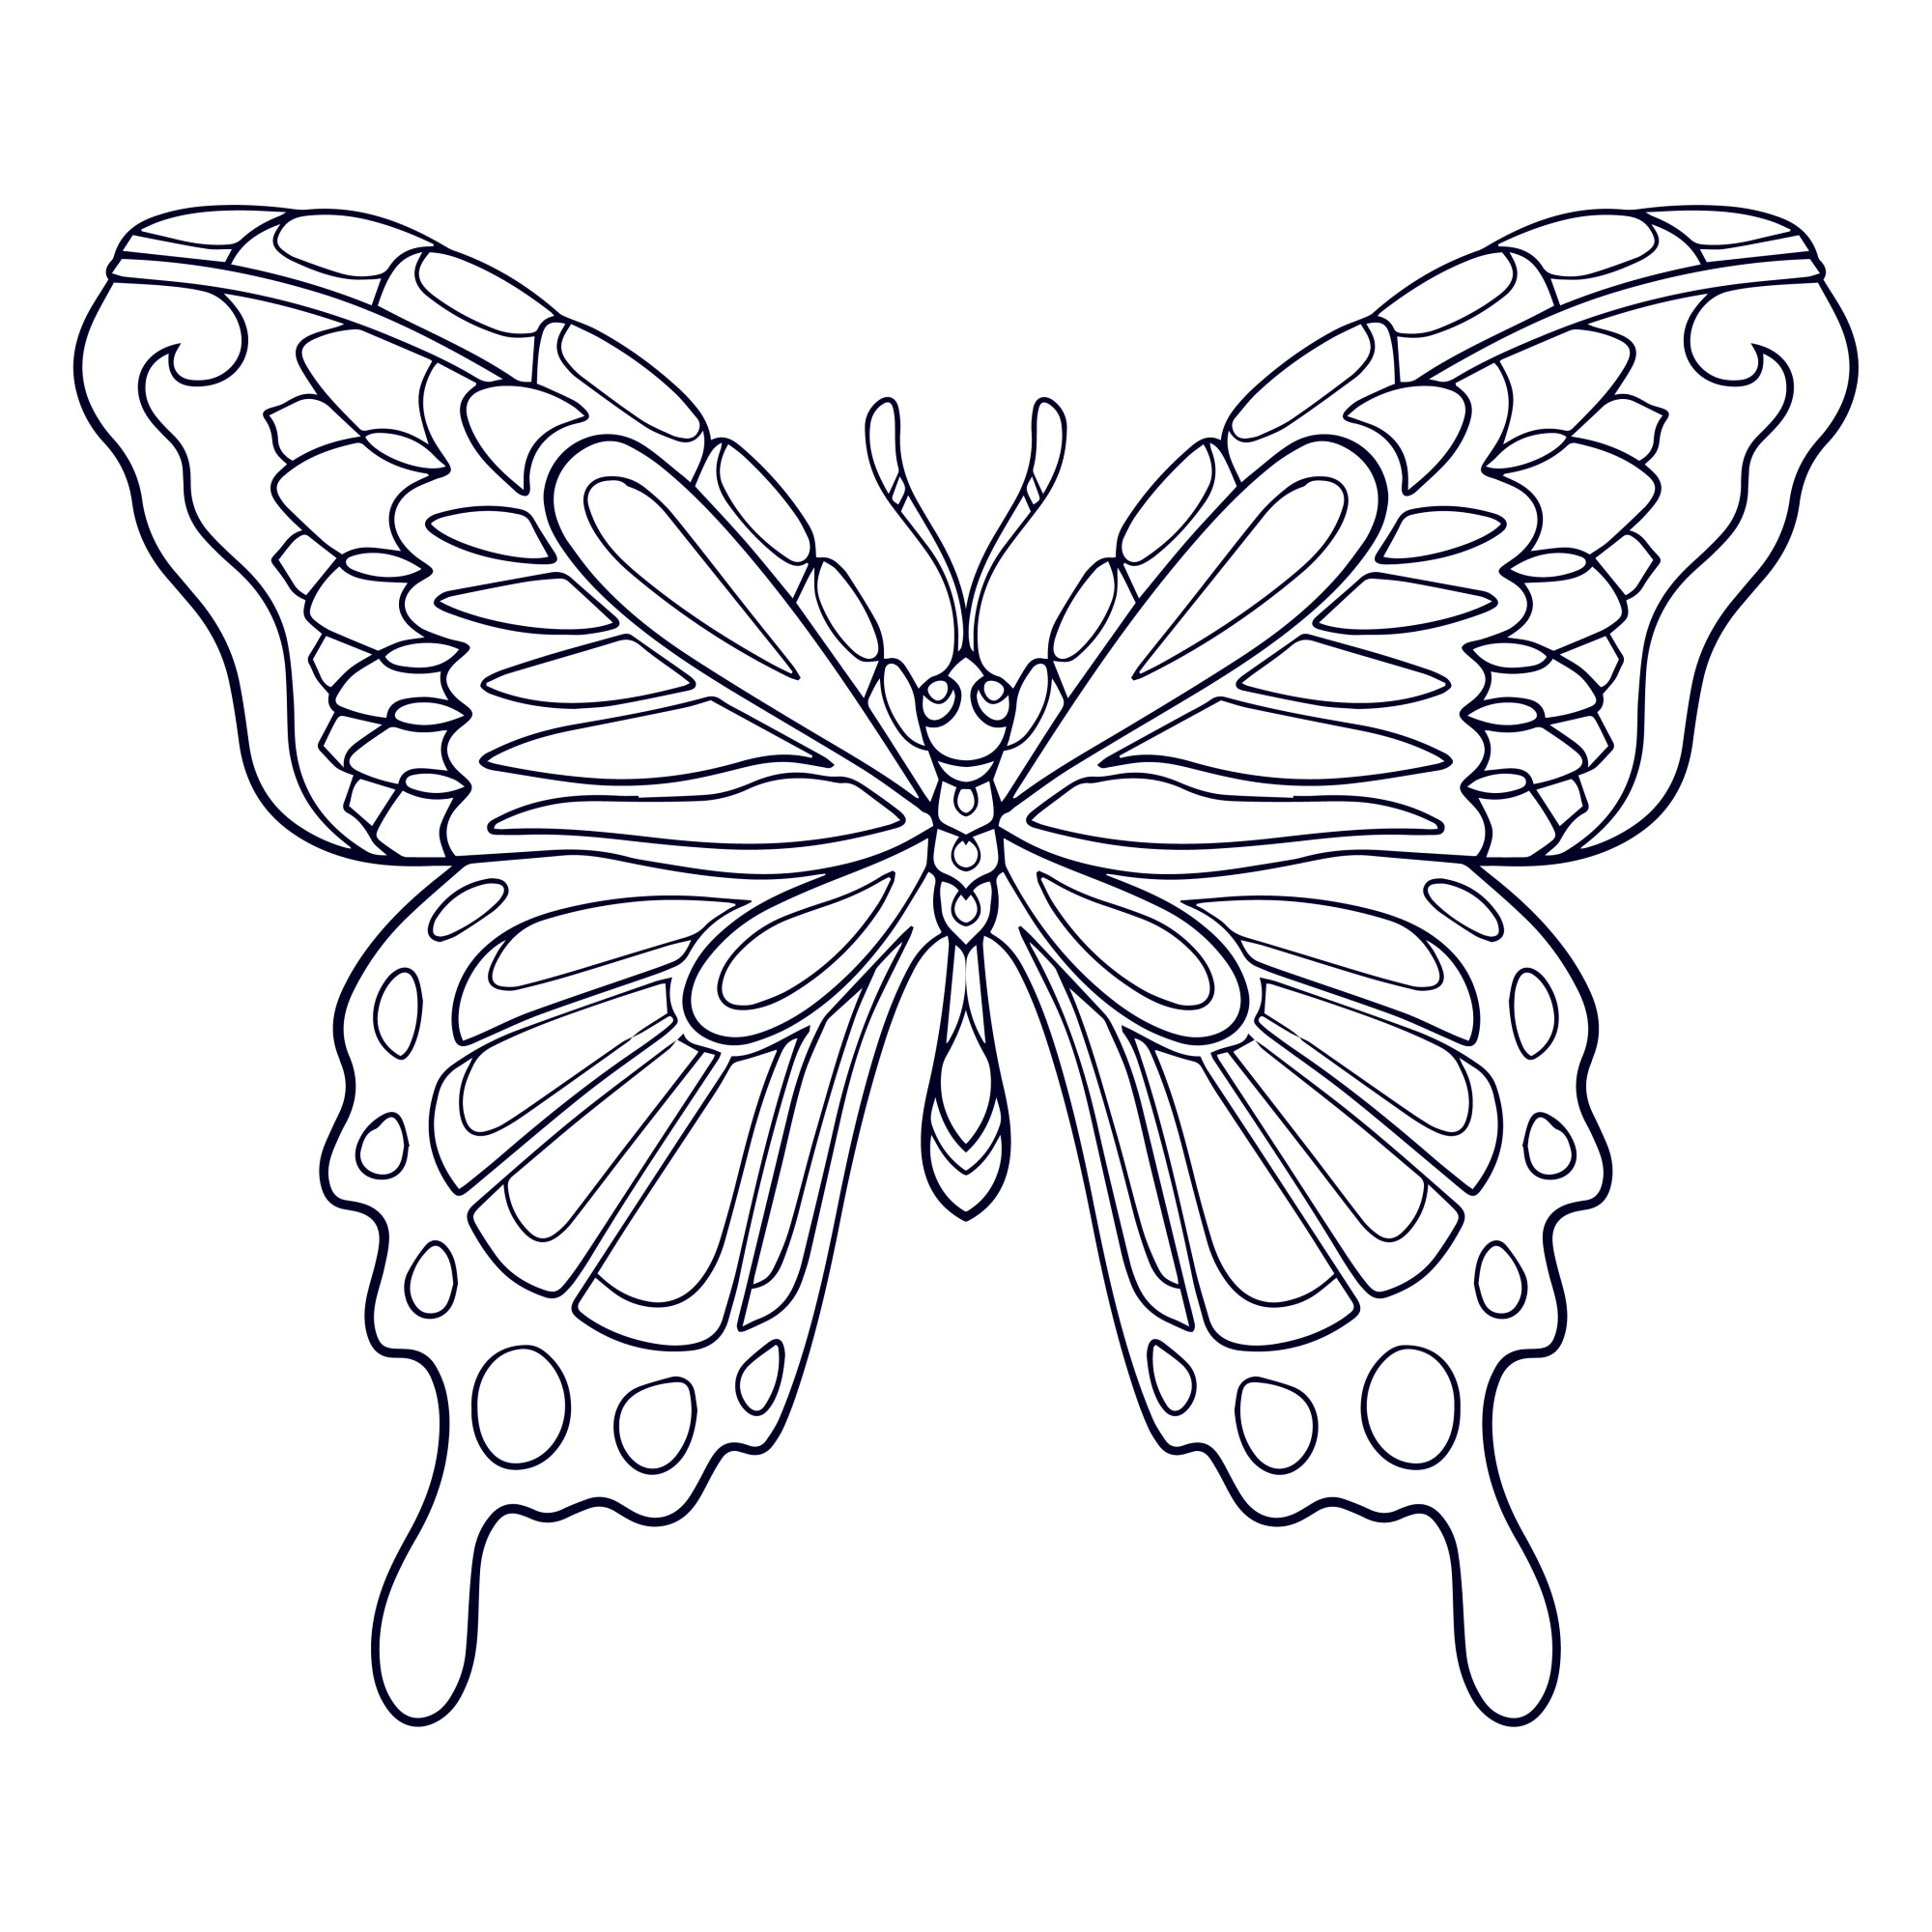 Раскраска для детей: бабочка с узорами мандола на крыльях